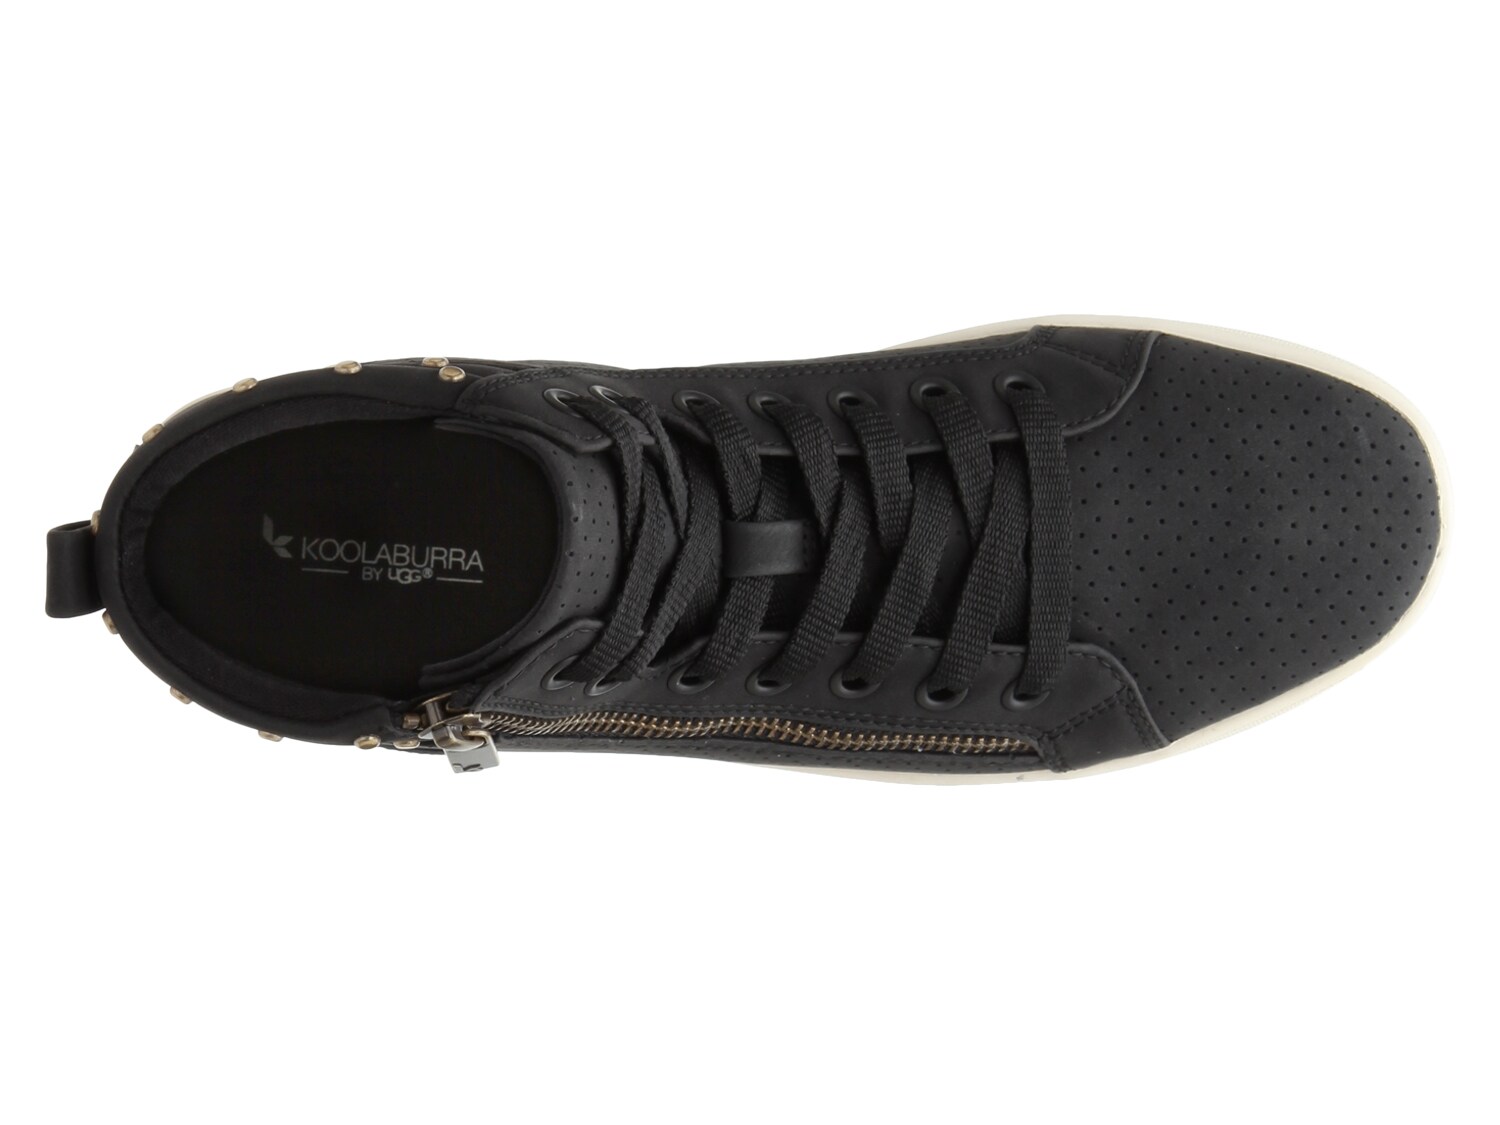 koolaburra by ugg women's w kayleigh high top sneaker